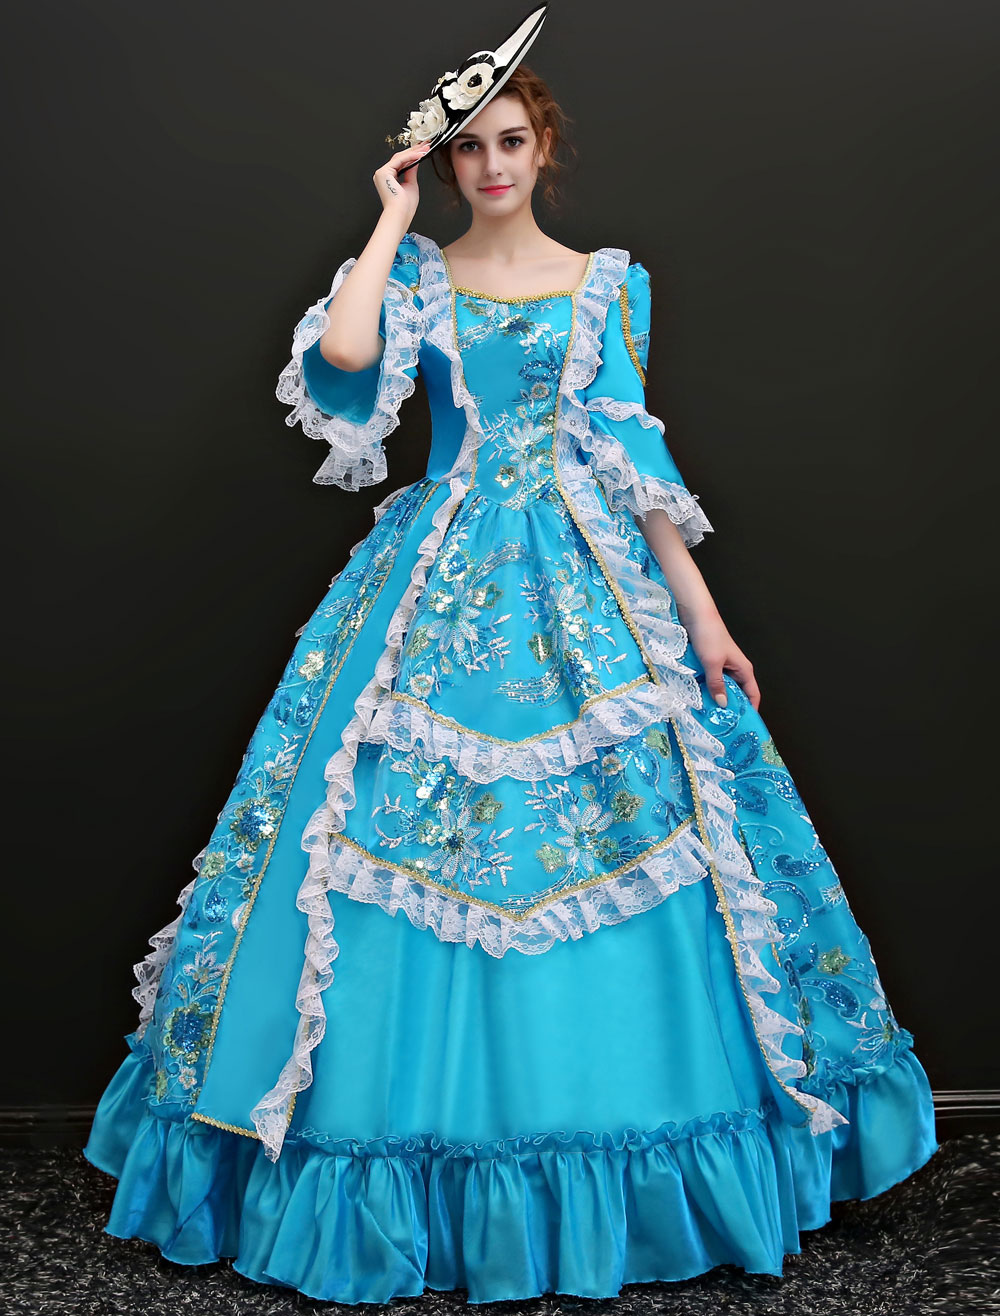 Costumes Costumes | Victorian Dress Costume Women's Light Sky blue ...